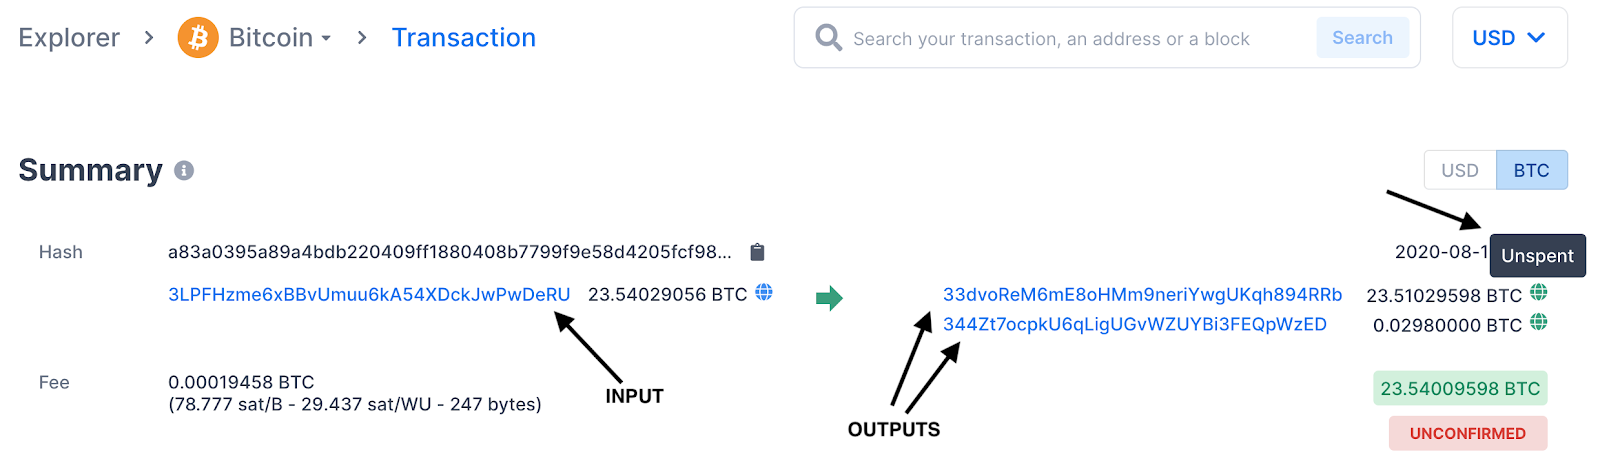 Contoh transaksi Bitcoin yang menunjukkan input dan outputnya